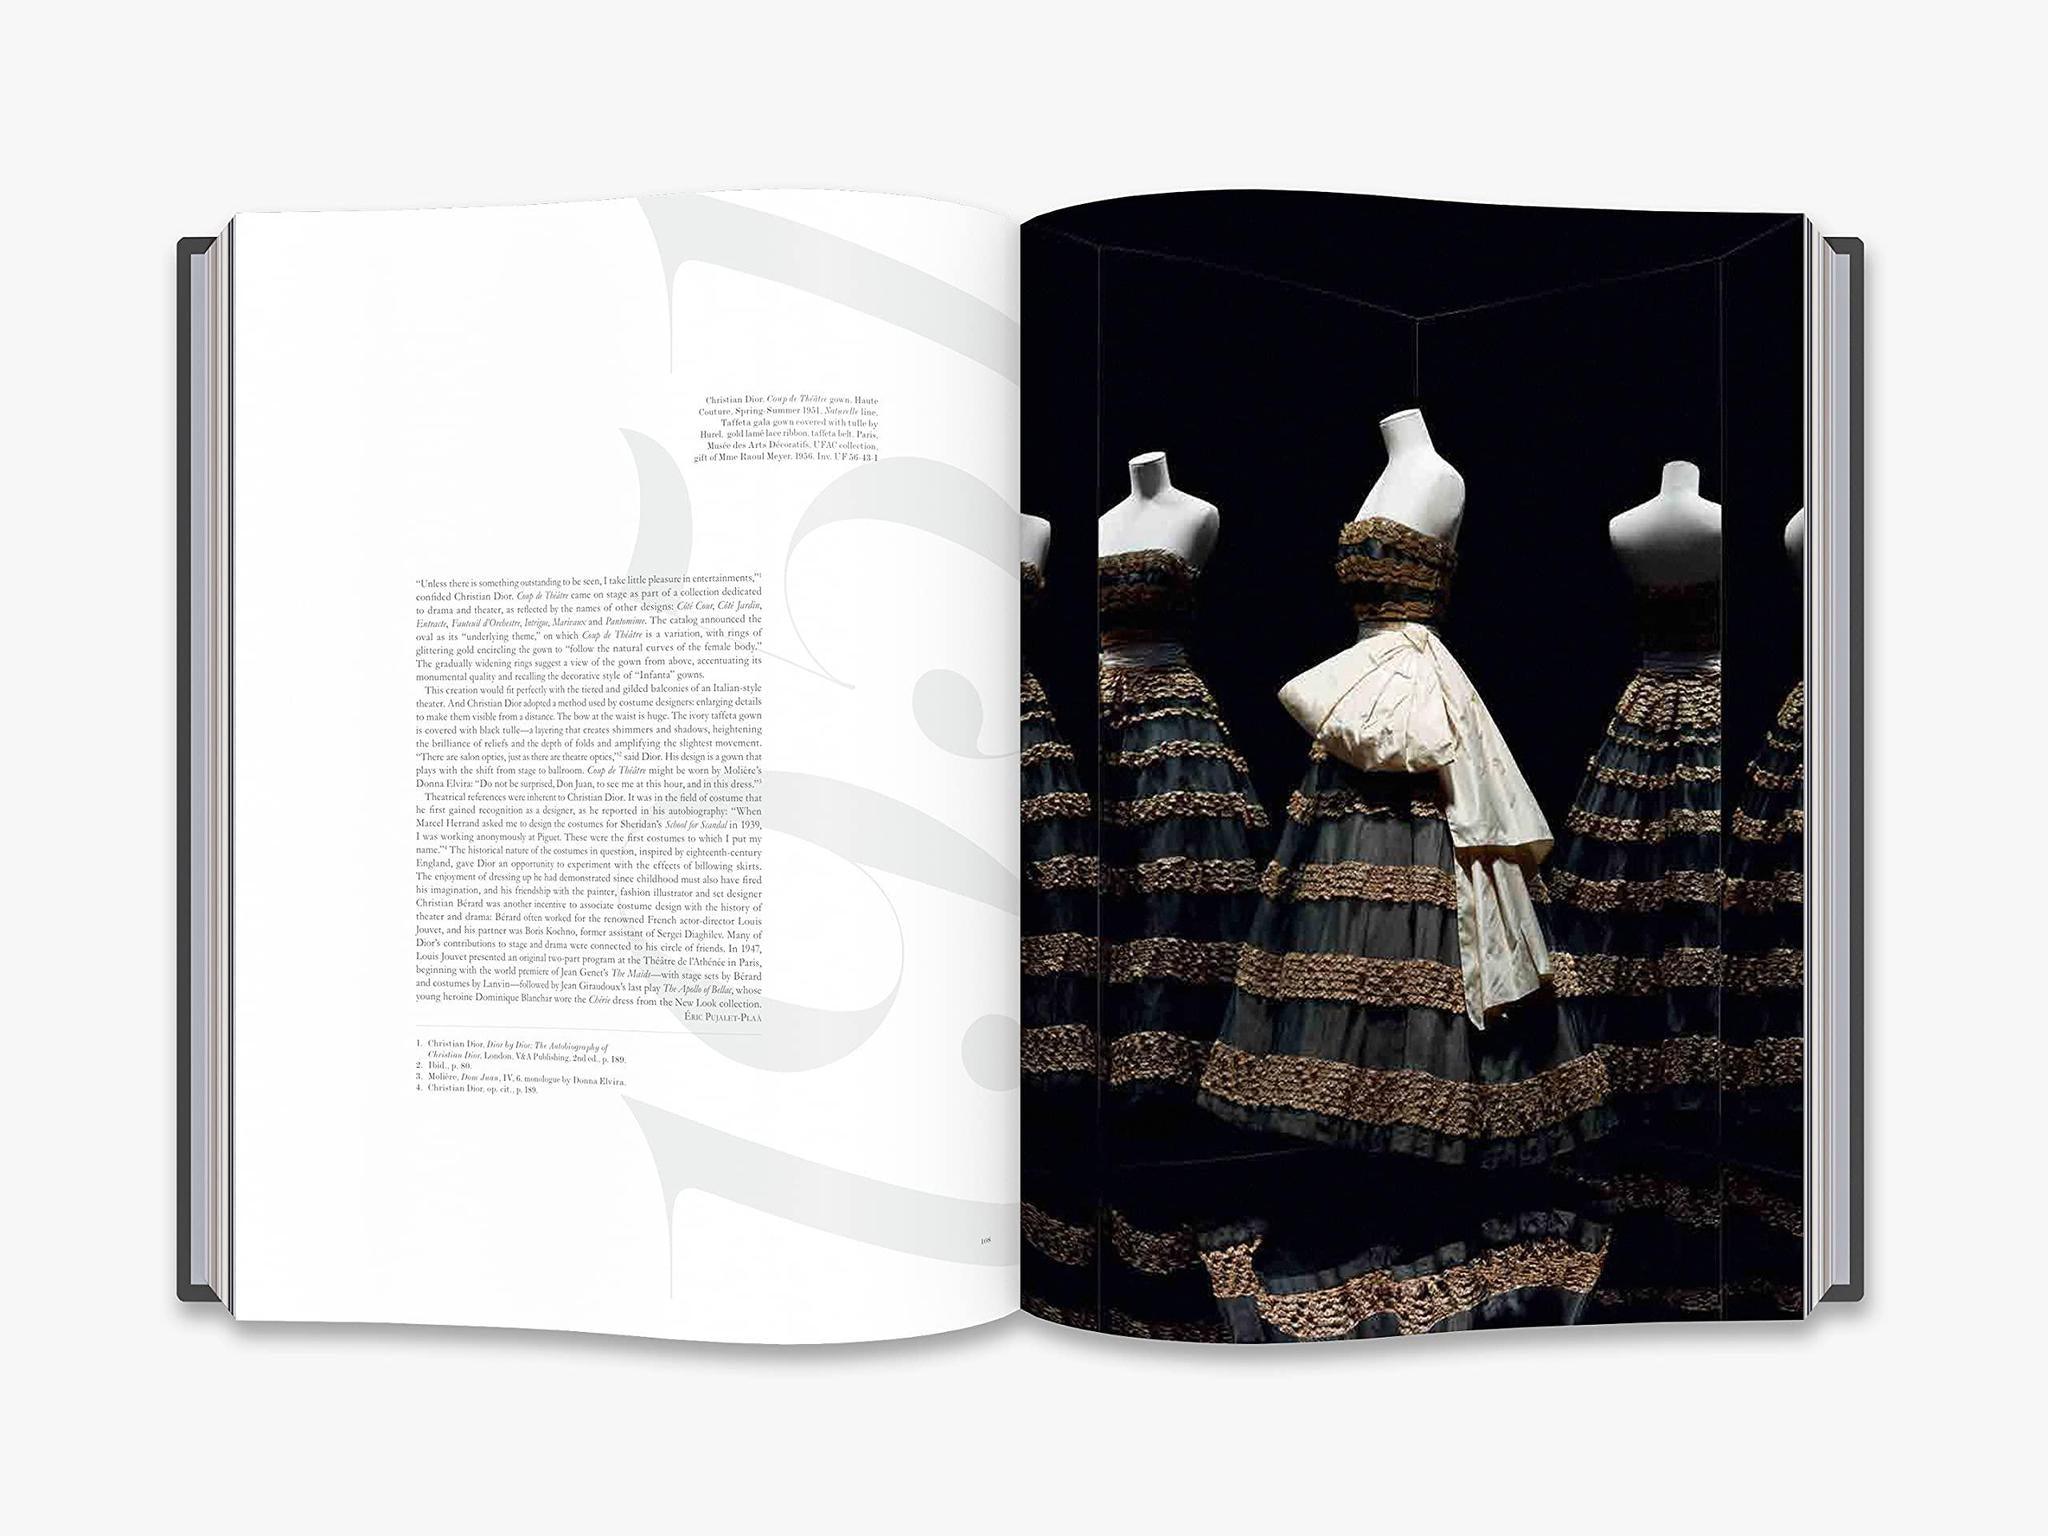 Christian Dior - Designer of Dreams - Thirty Six Knots - thirtysixknots.com